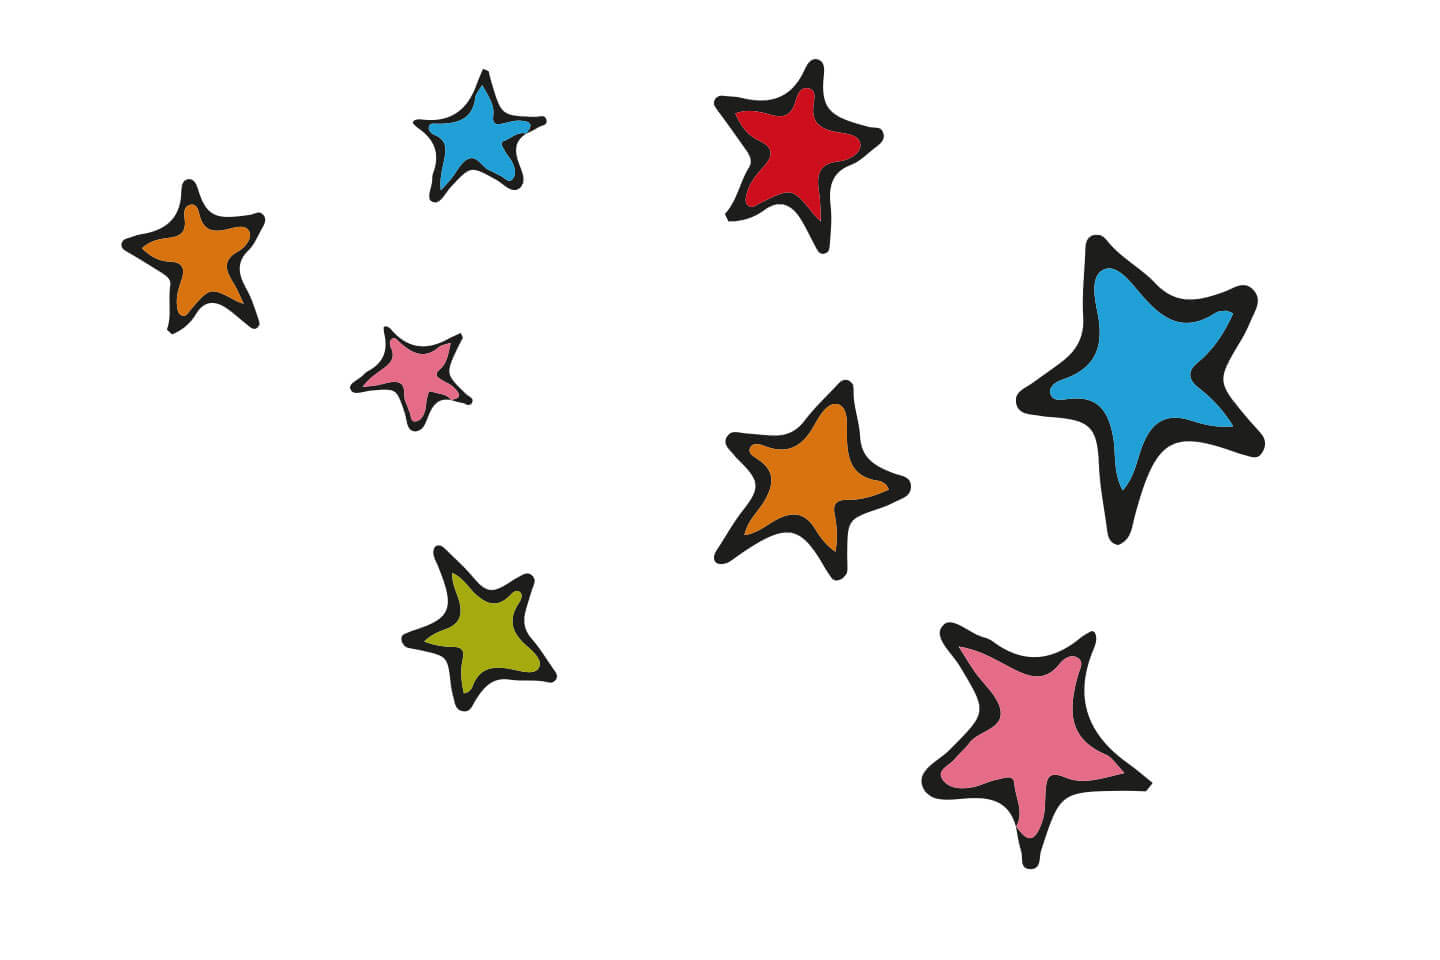 Colourful illustrated stars